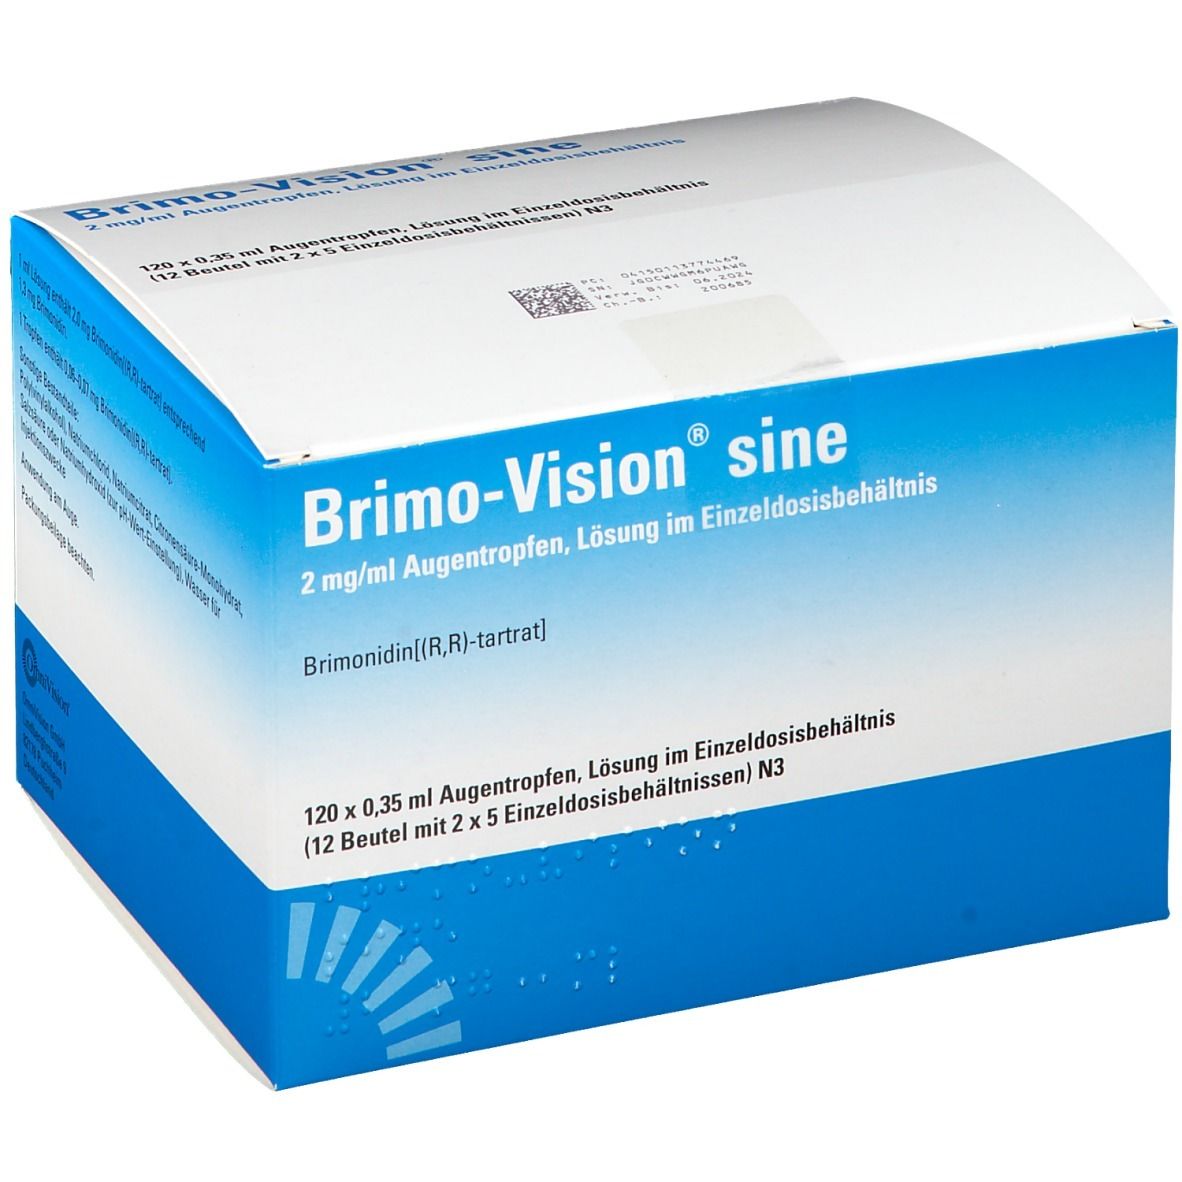 Brimo-Vision® sine 2 mg/ml